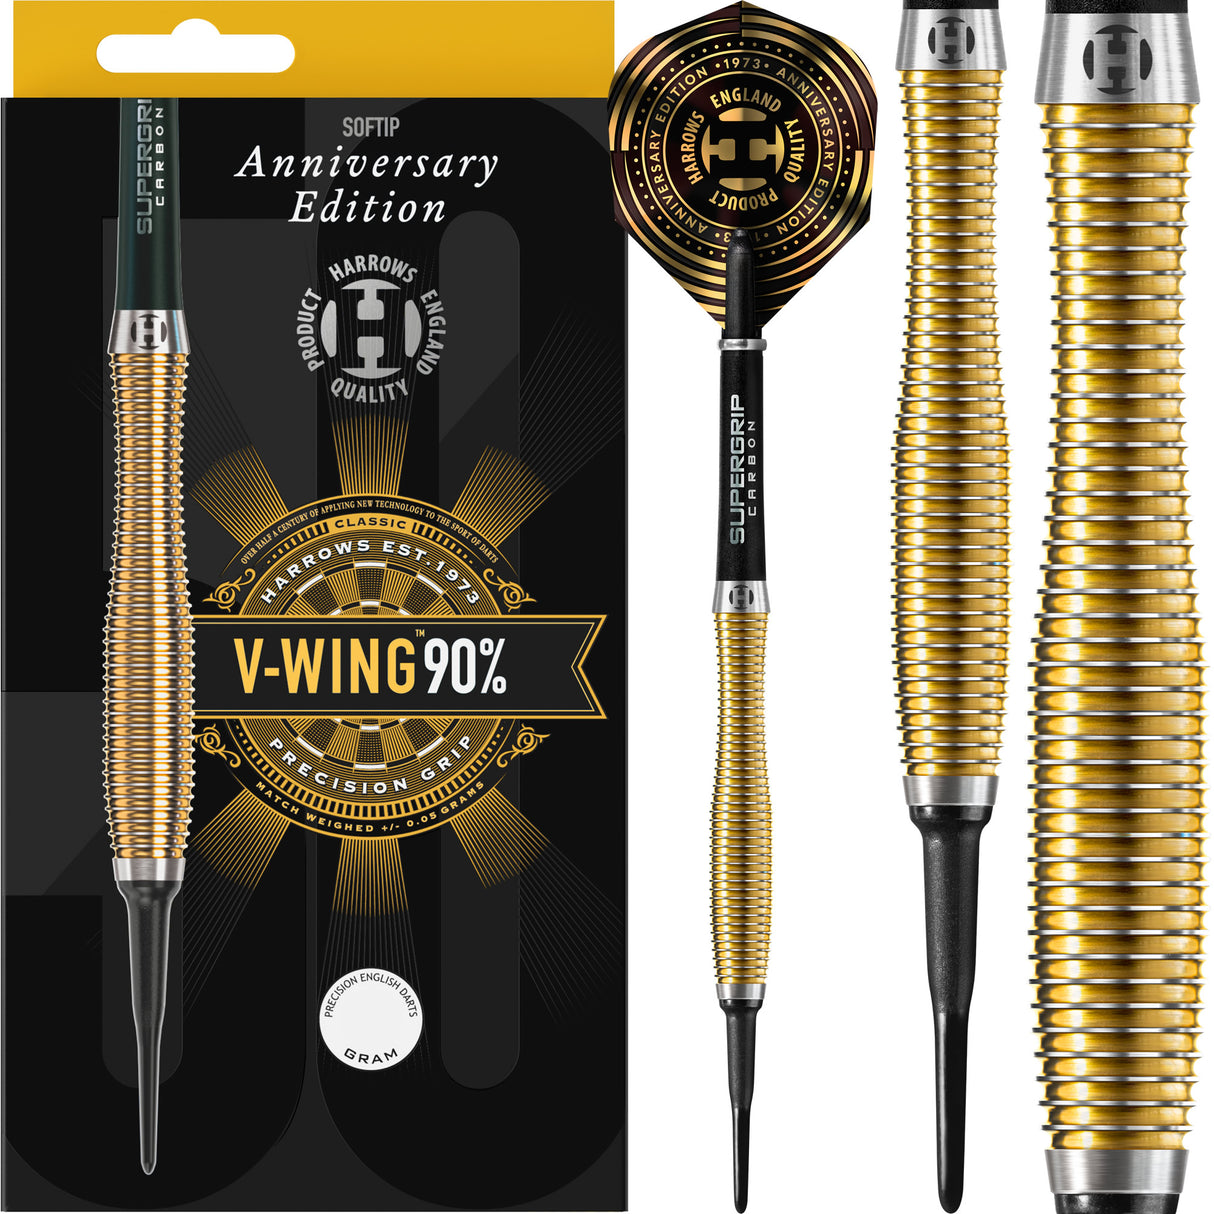 Harrows V Wing Darts - Soft Tip - 90% - Anniversary Edition - Gold Titanium